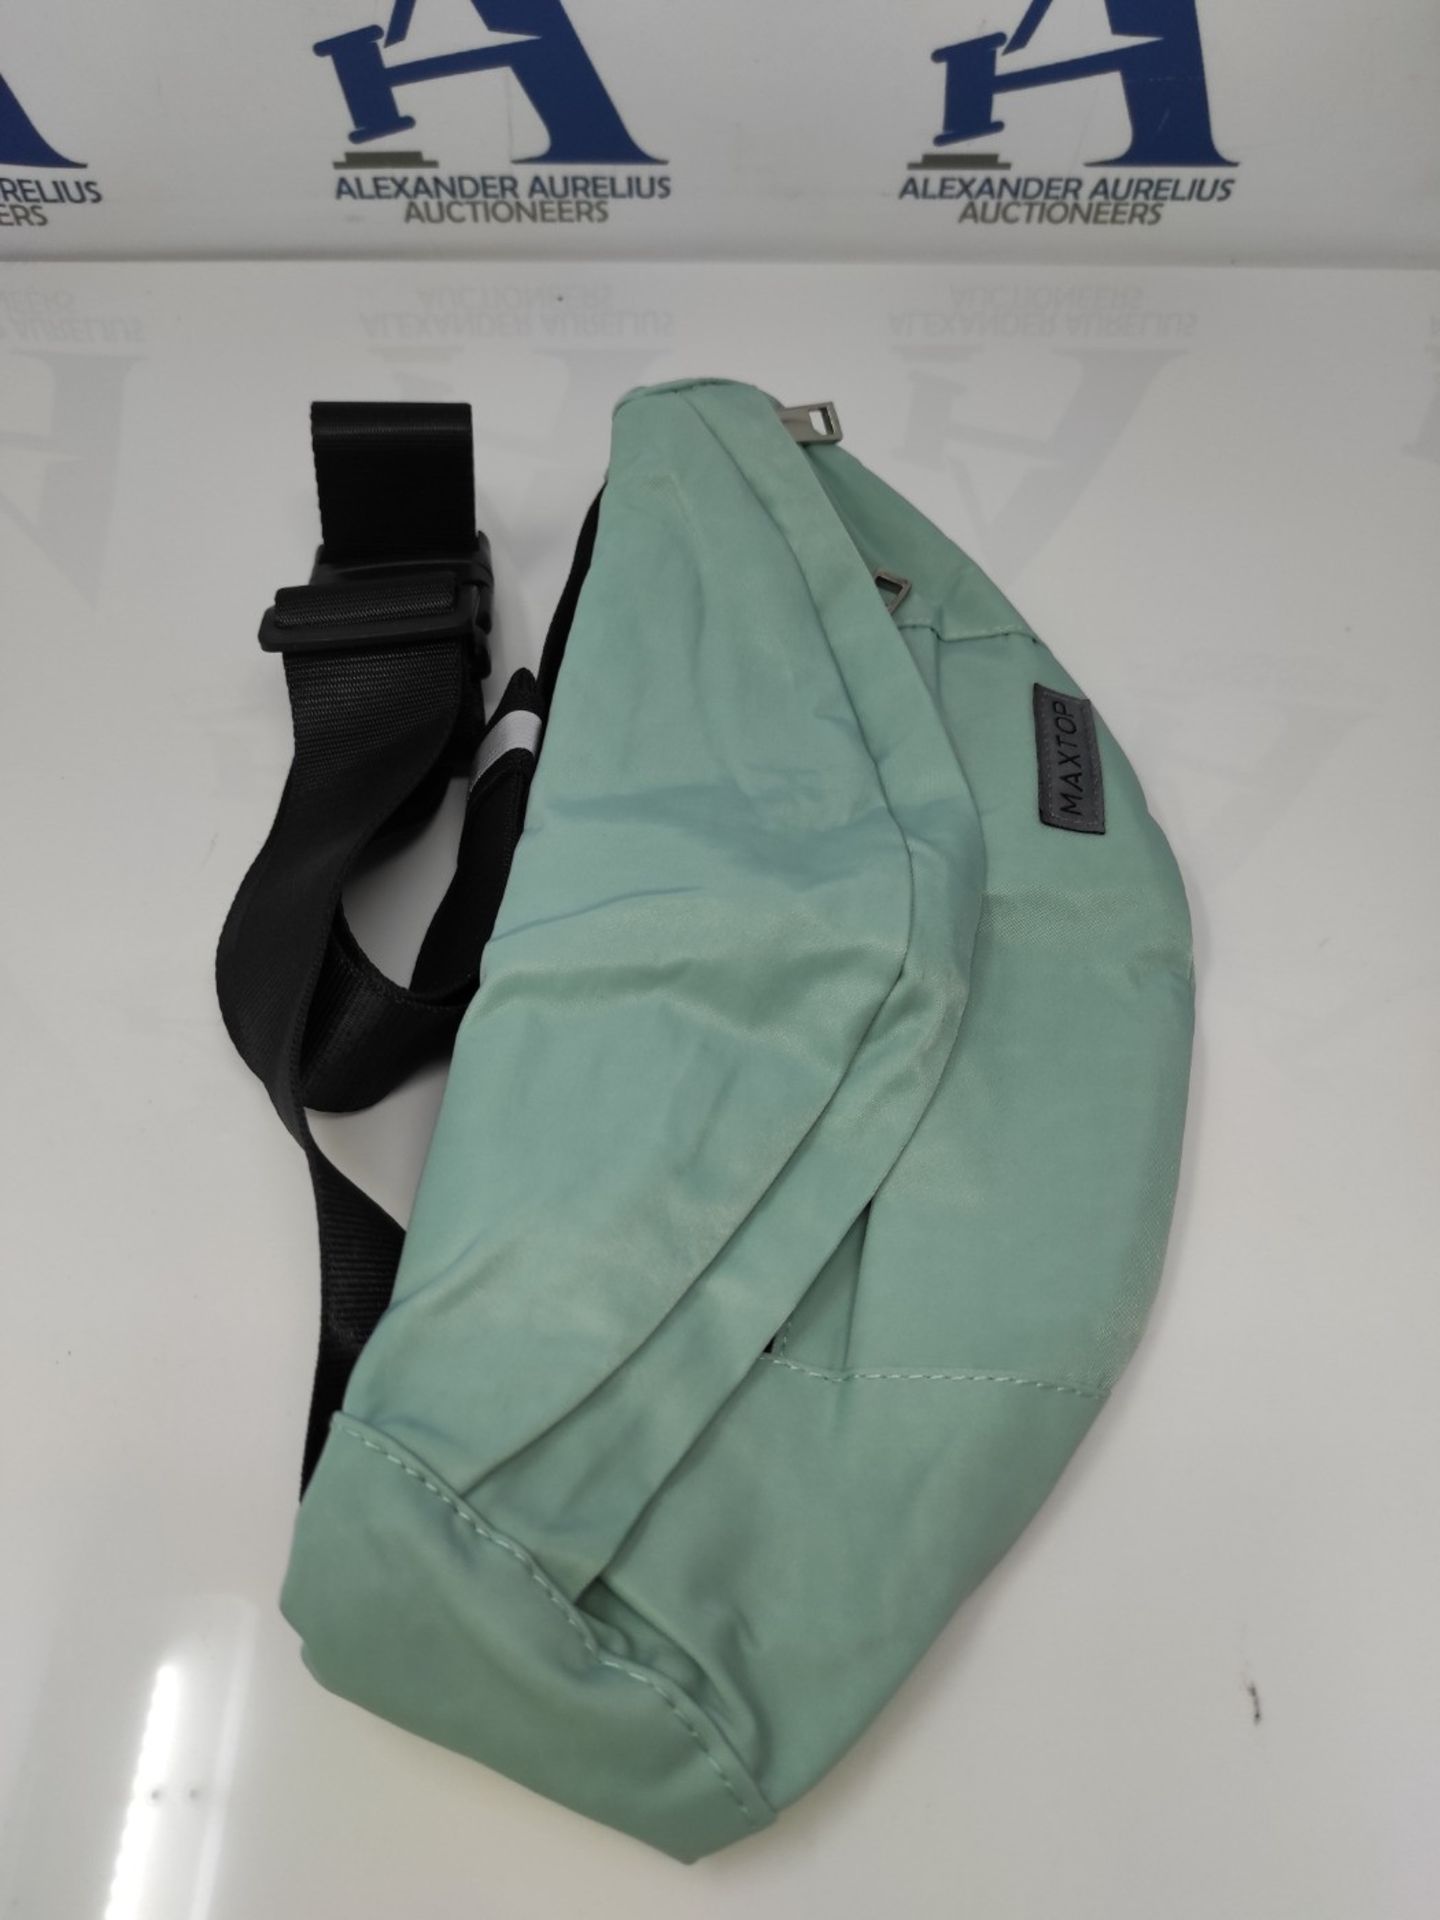 MAXTOP Bag Bae Men Women Bag Bae Unisex with Headphone Jack and 4 Zipper Pockets Adjus